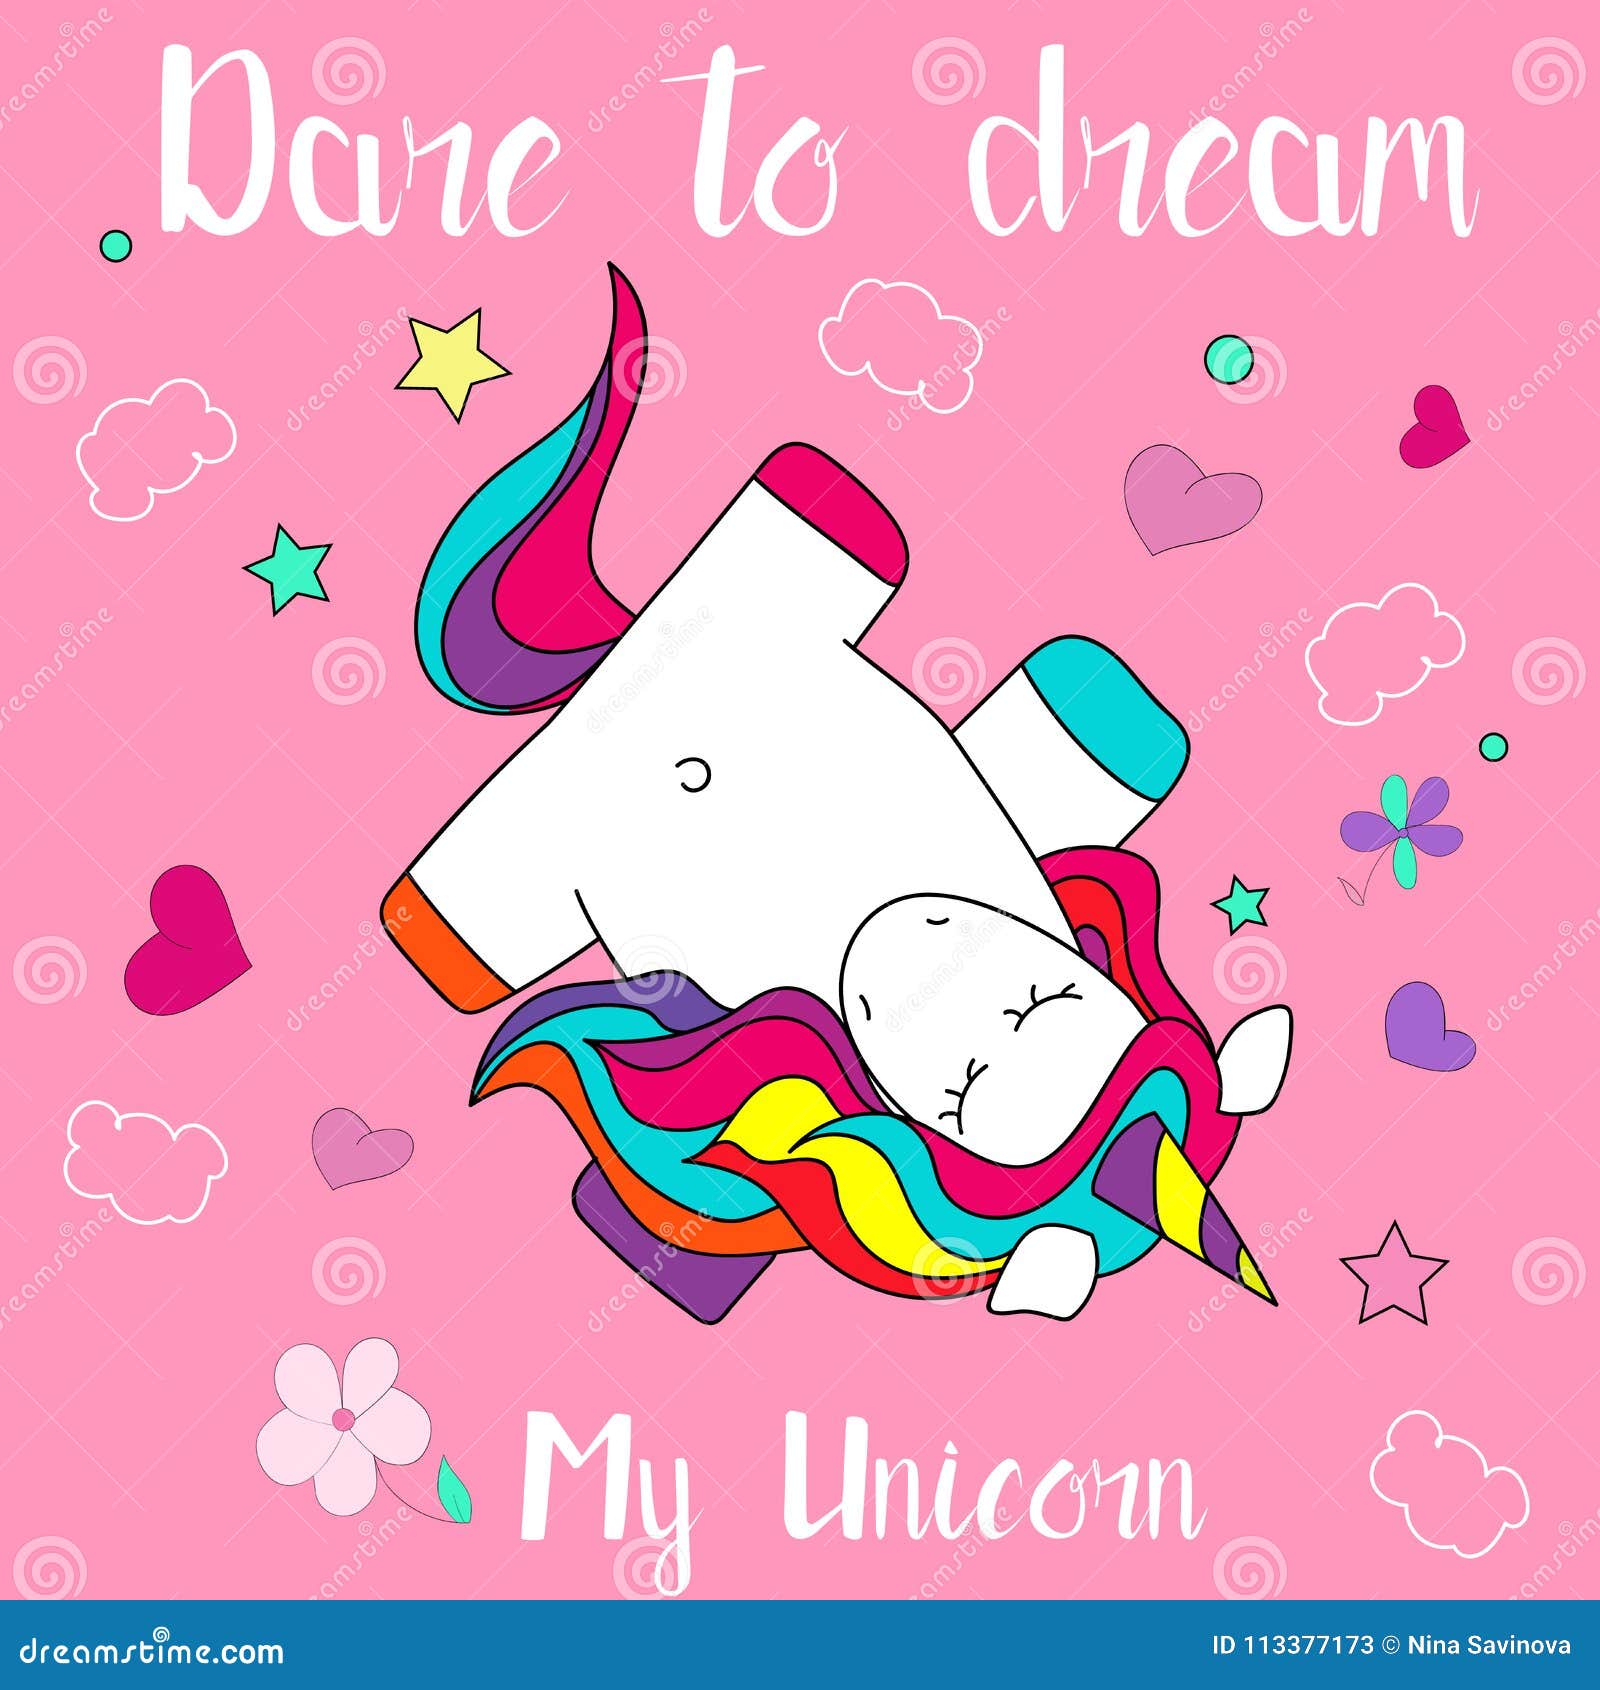 Download Beautiful And Funny Hand Drawn Dare To Dream Unicorn ...